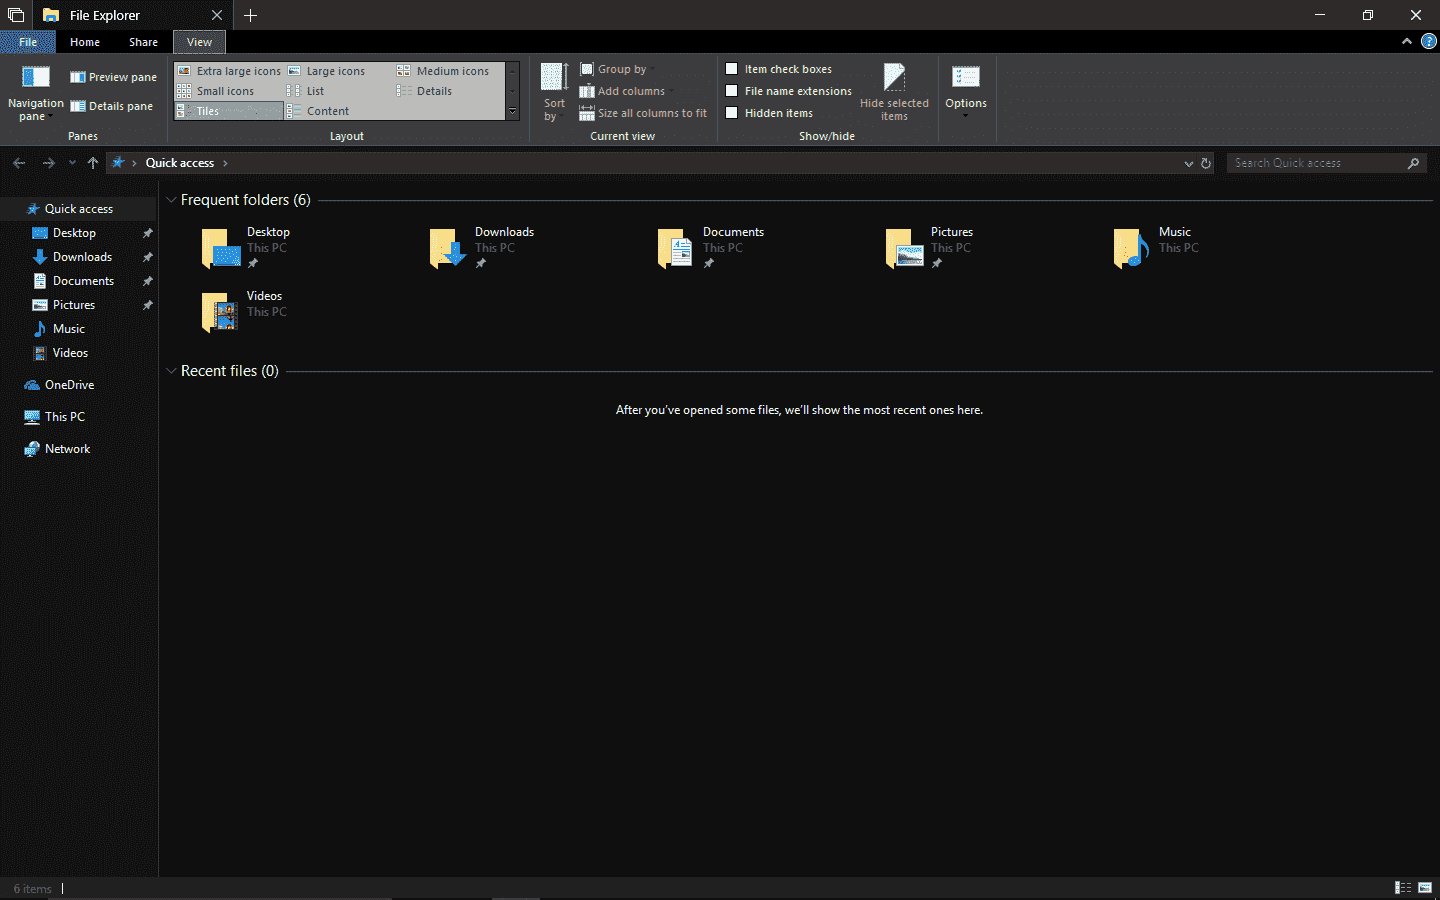 Microsoft reveals final look of Dark Theme in File Explorer for Windows 10 ba28c750-6c8c-4abf-98d8-17449977f83d?upload=true.png